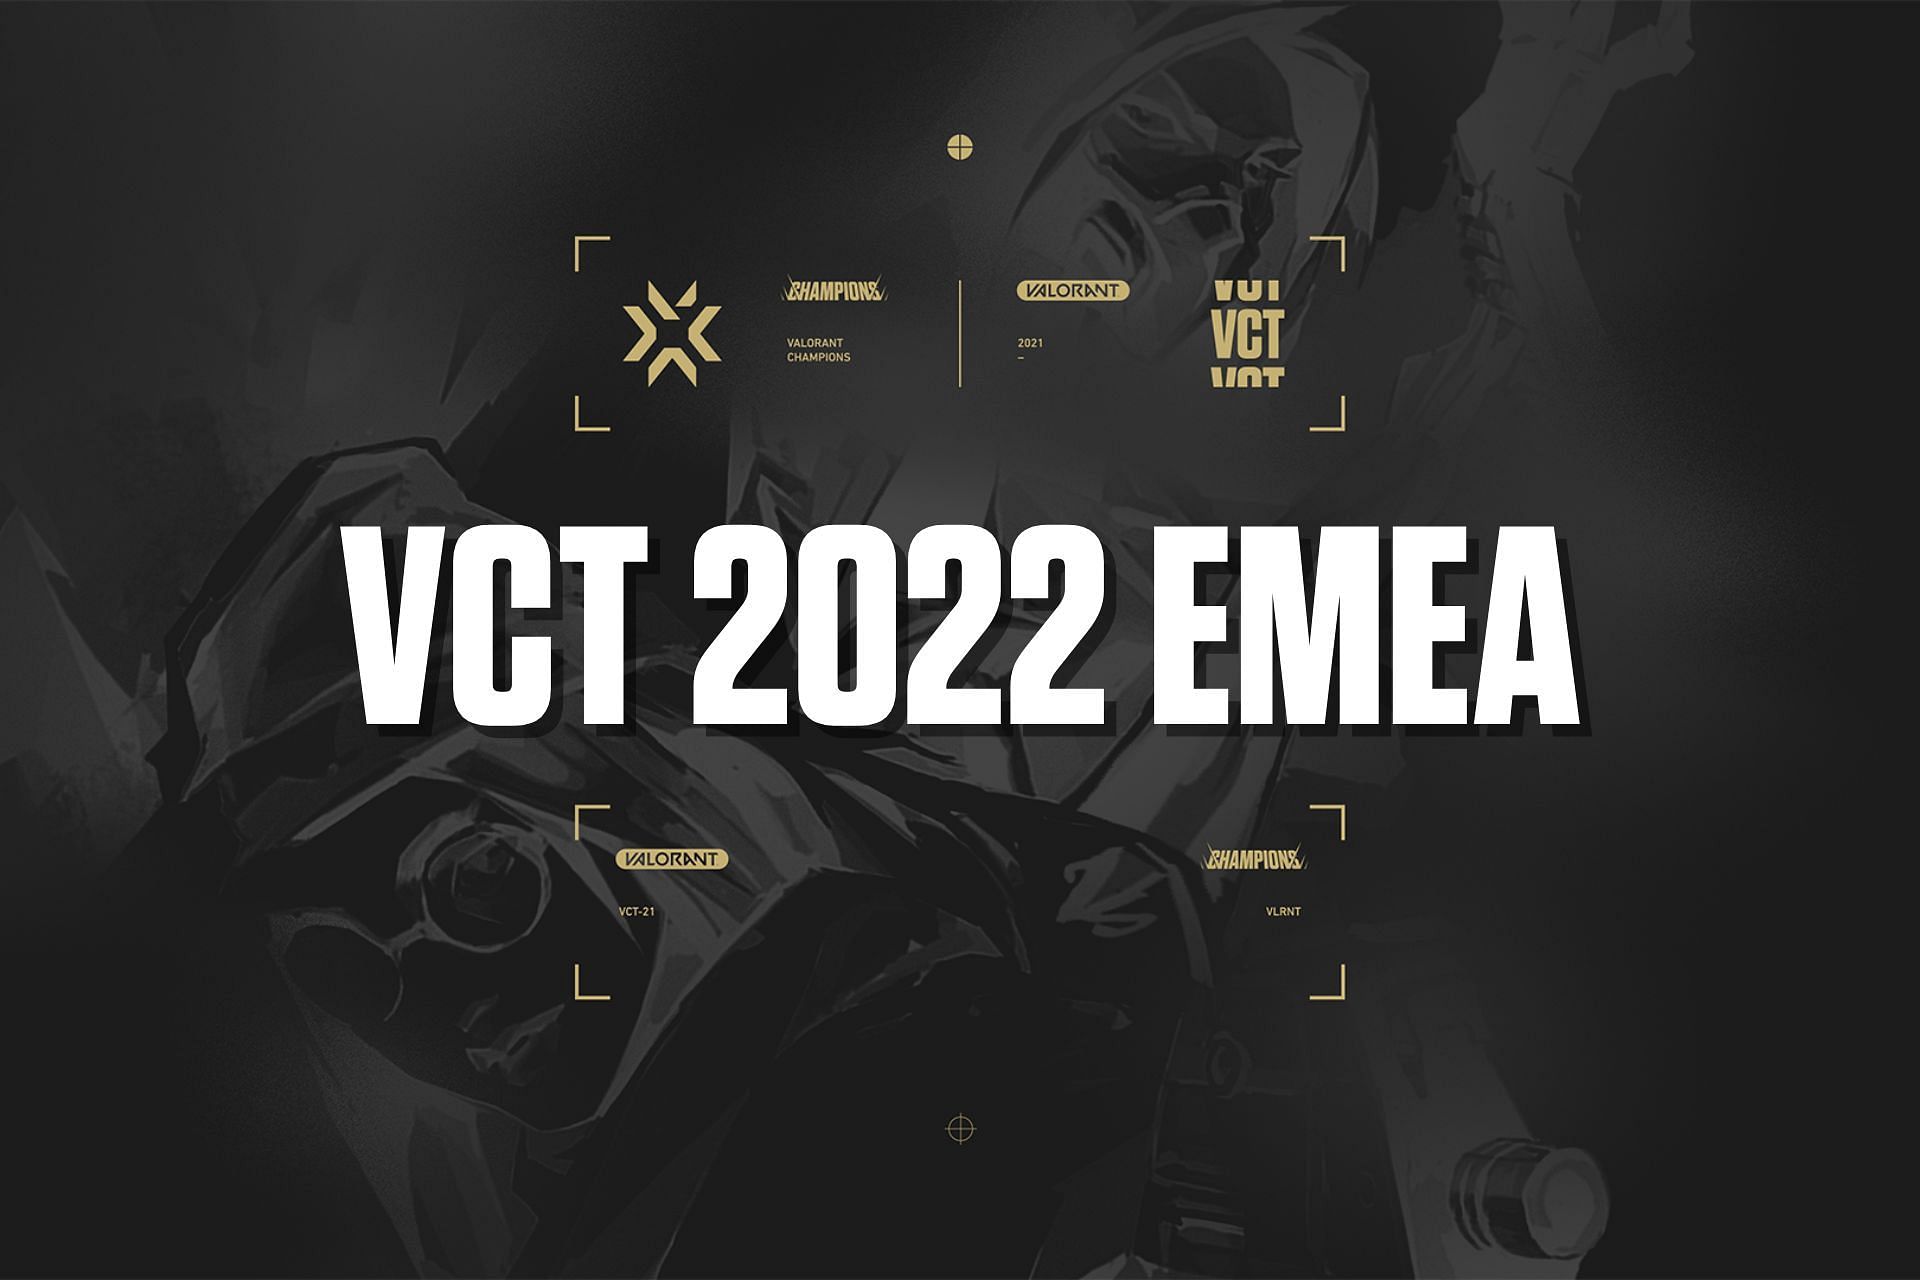 Format changes for VCT 2022 EMEA (Image via Sportskeeda)